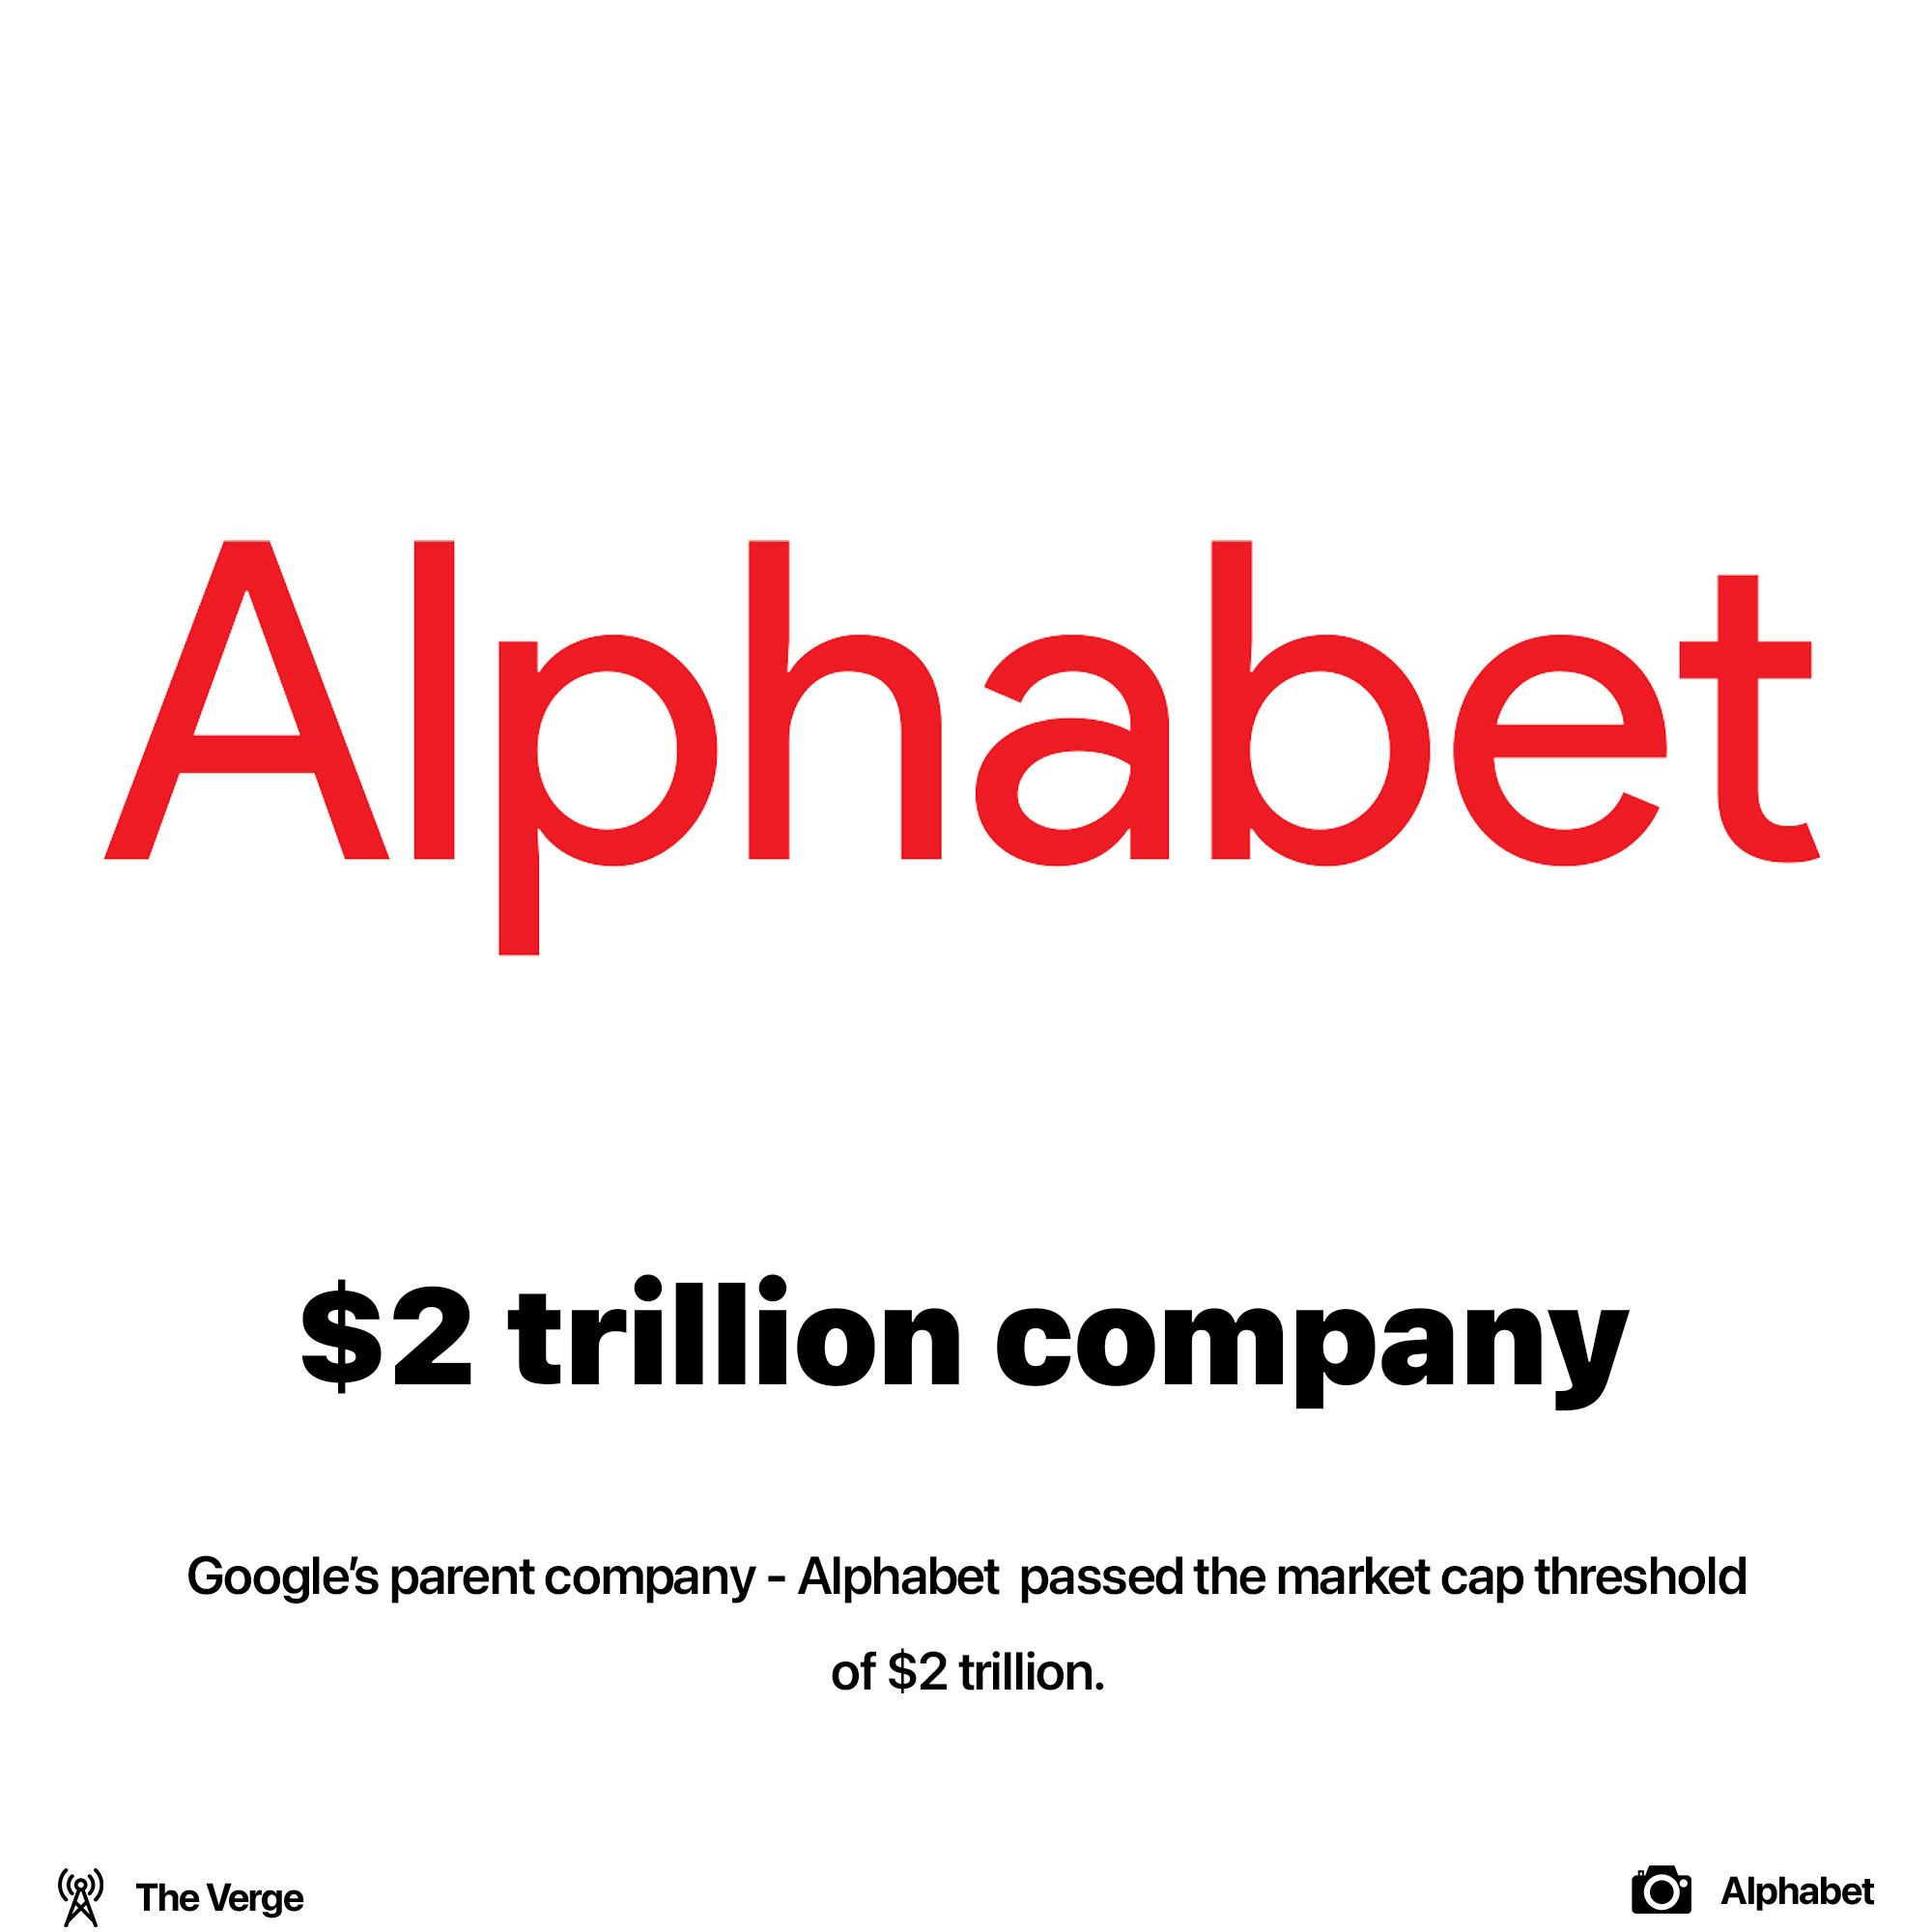 Alphabet is $2T company